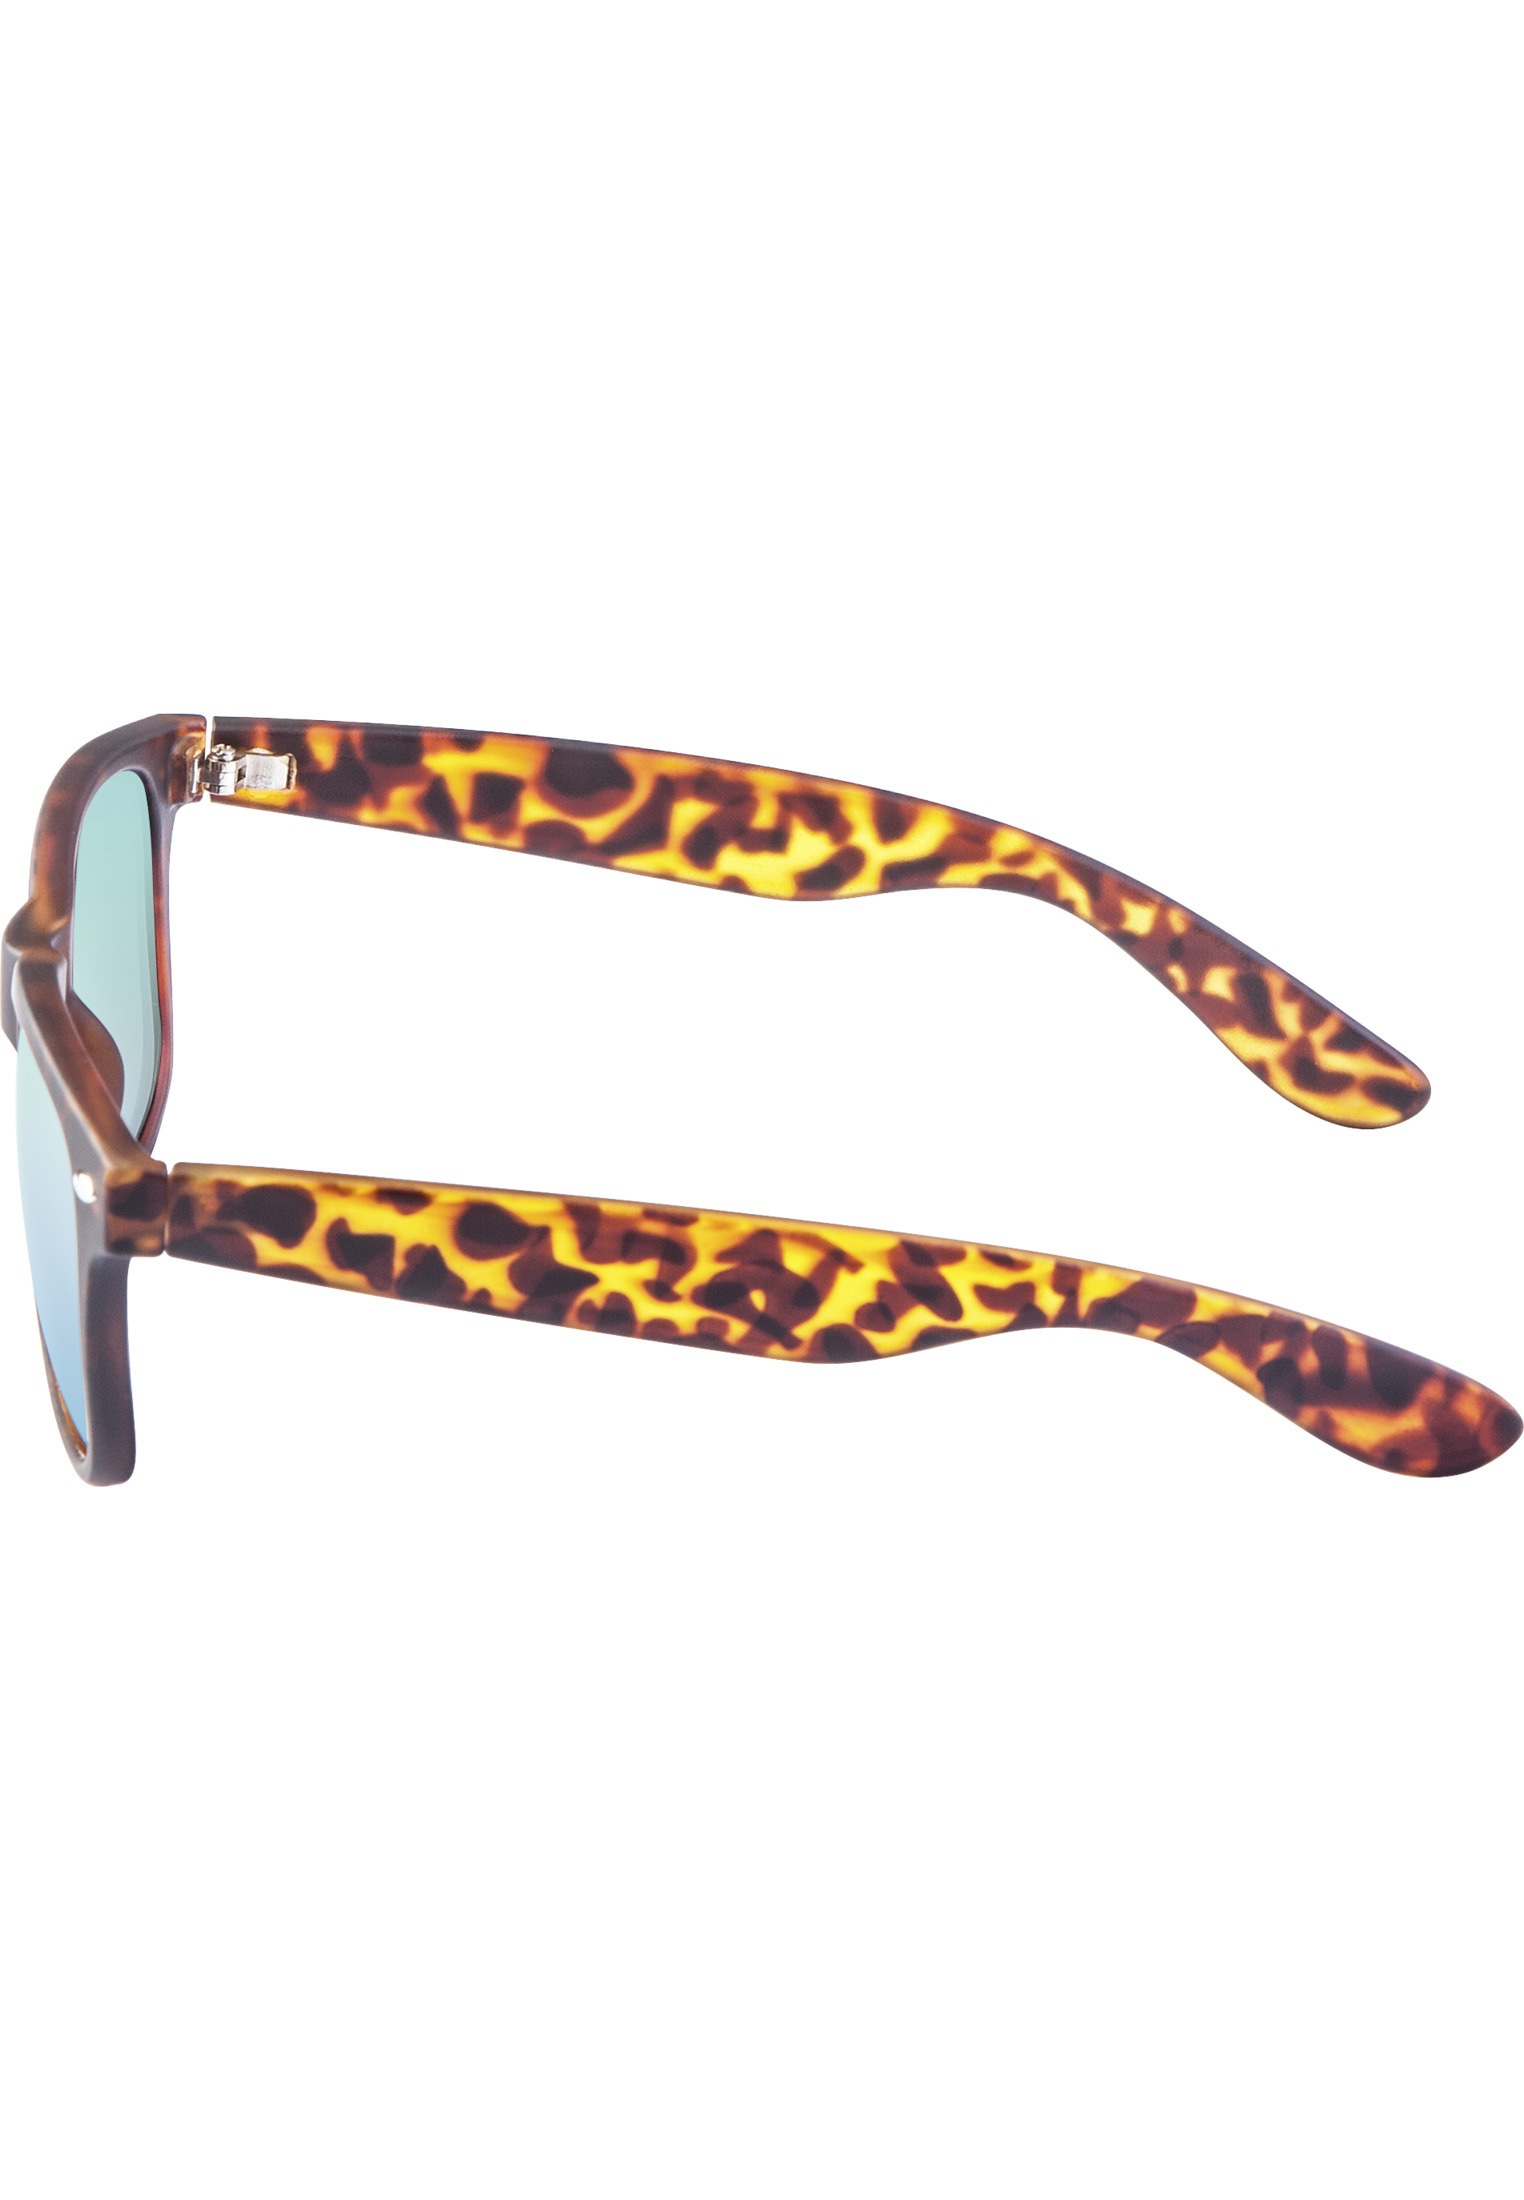 »Accessoires Sunglasses Likoma MSTRDS BAUR | Sonnenbrille bestellen für Youth«